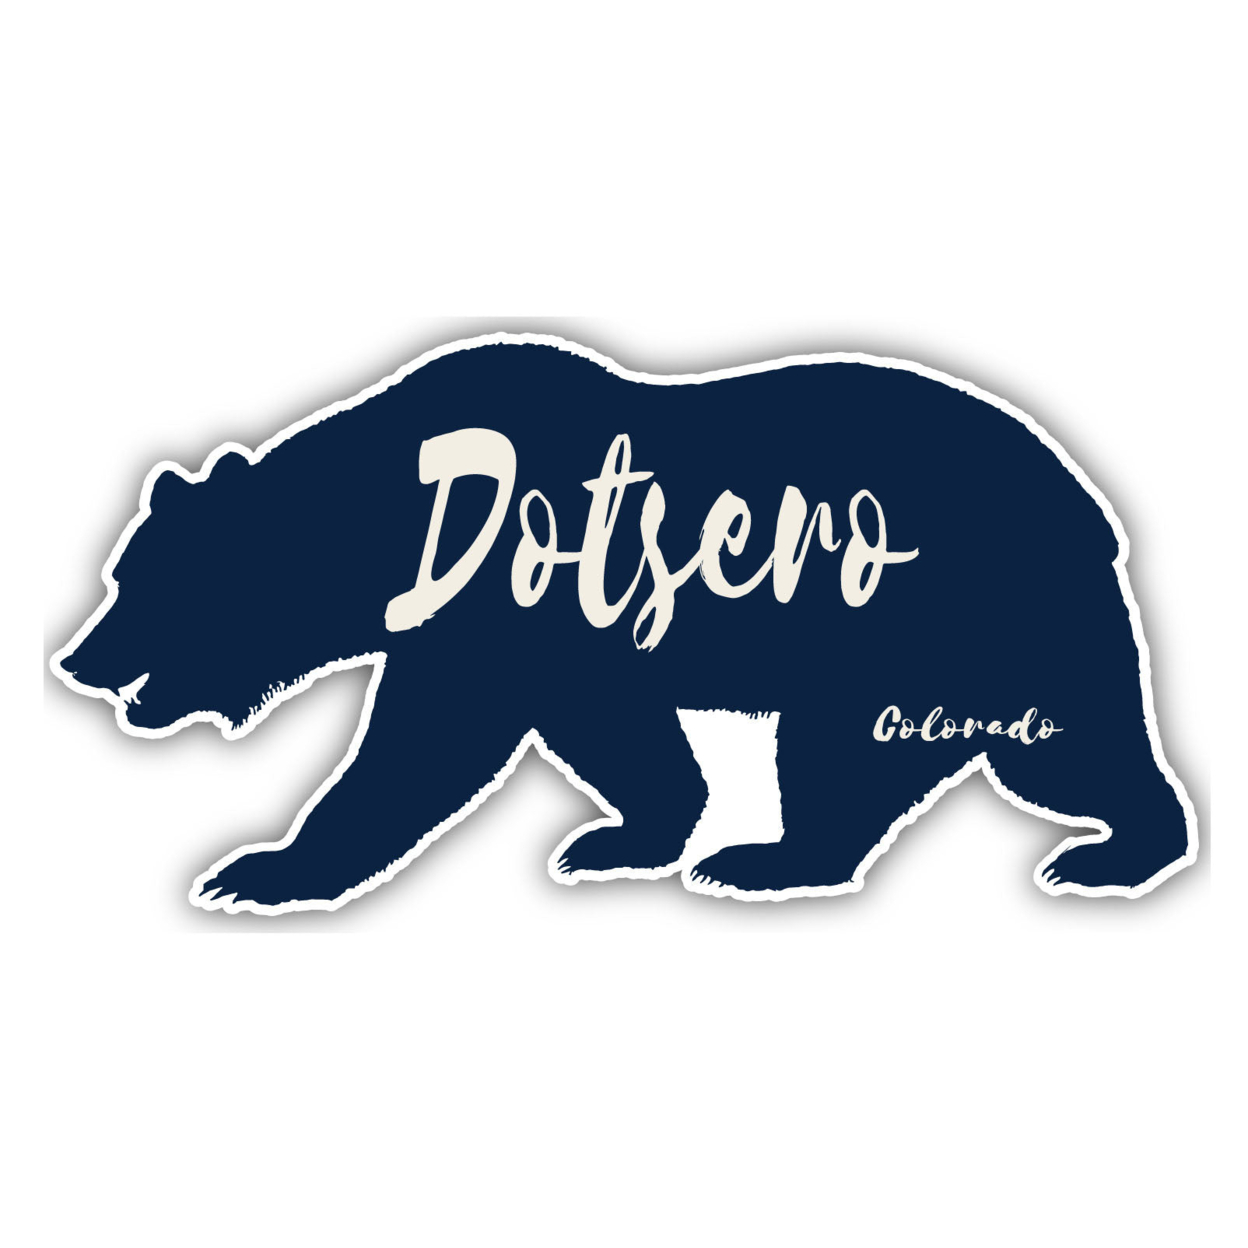 Dotsero Colorado Souvenir Decorative Stickers (Choose Theme And Size) - 4-Pack, 2-Inch, Bear